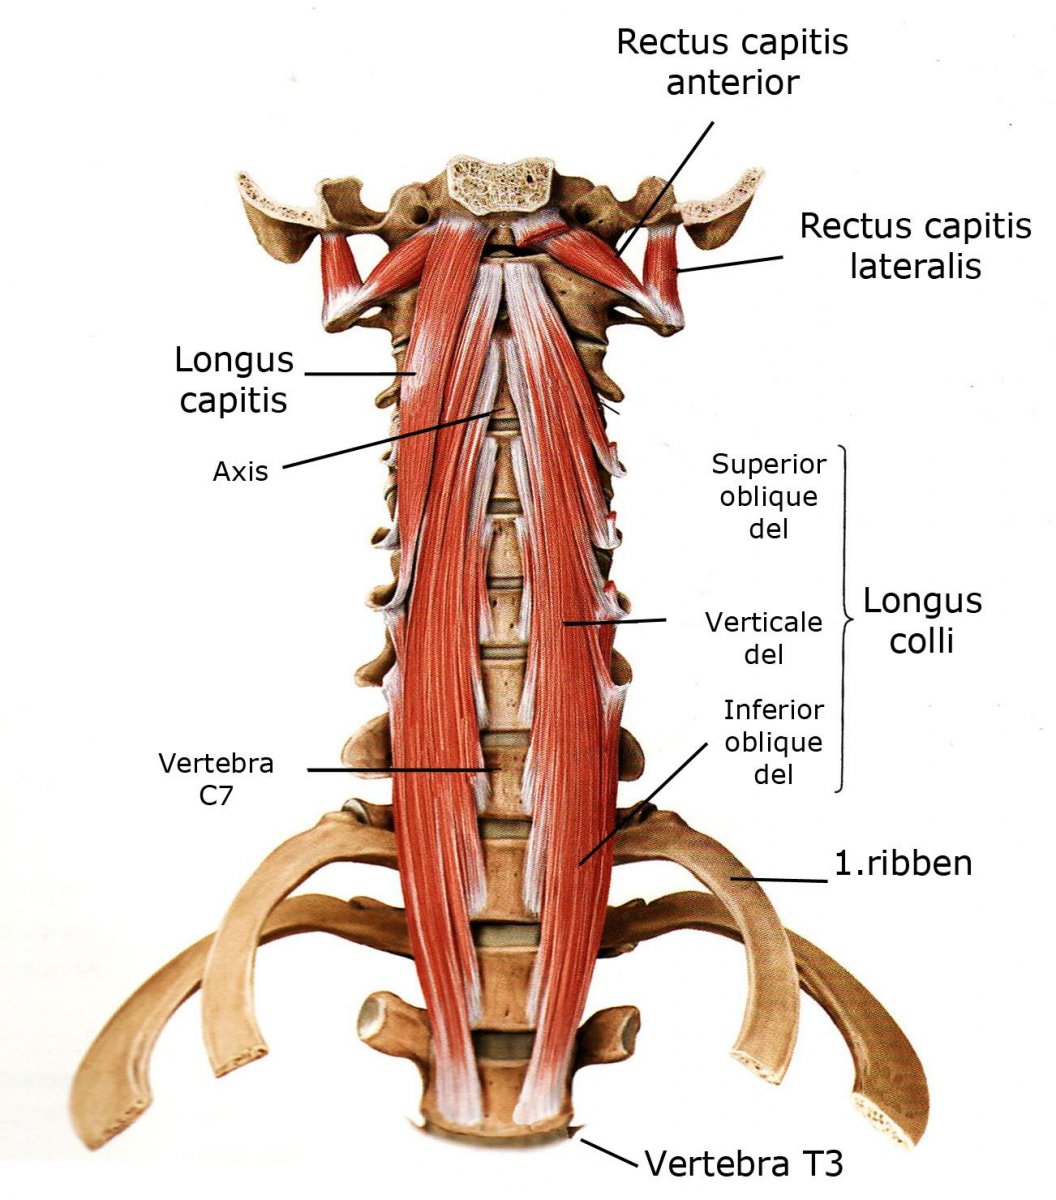 Longus capitis мышца